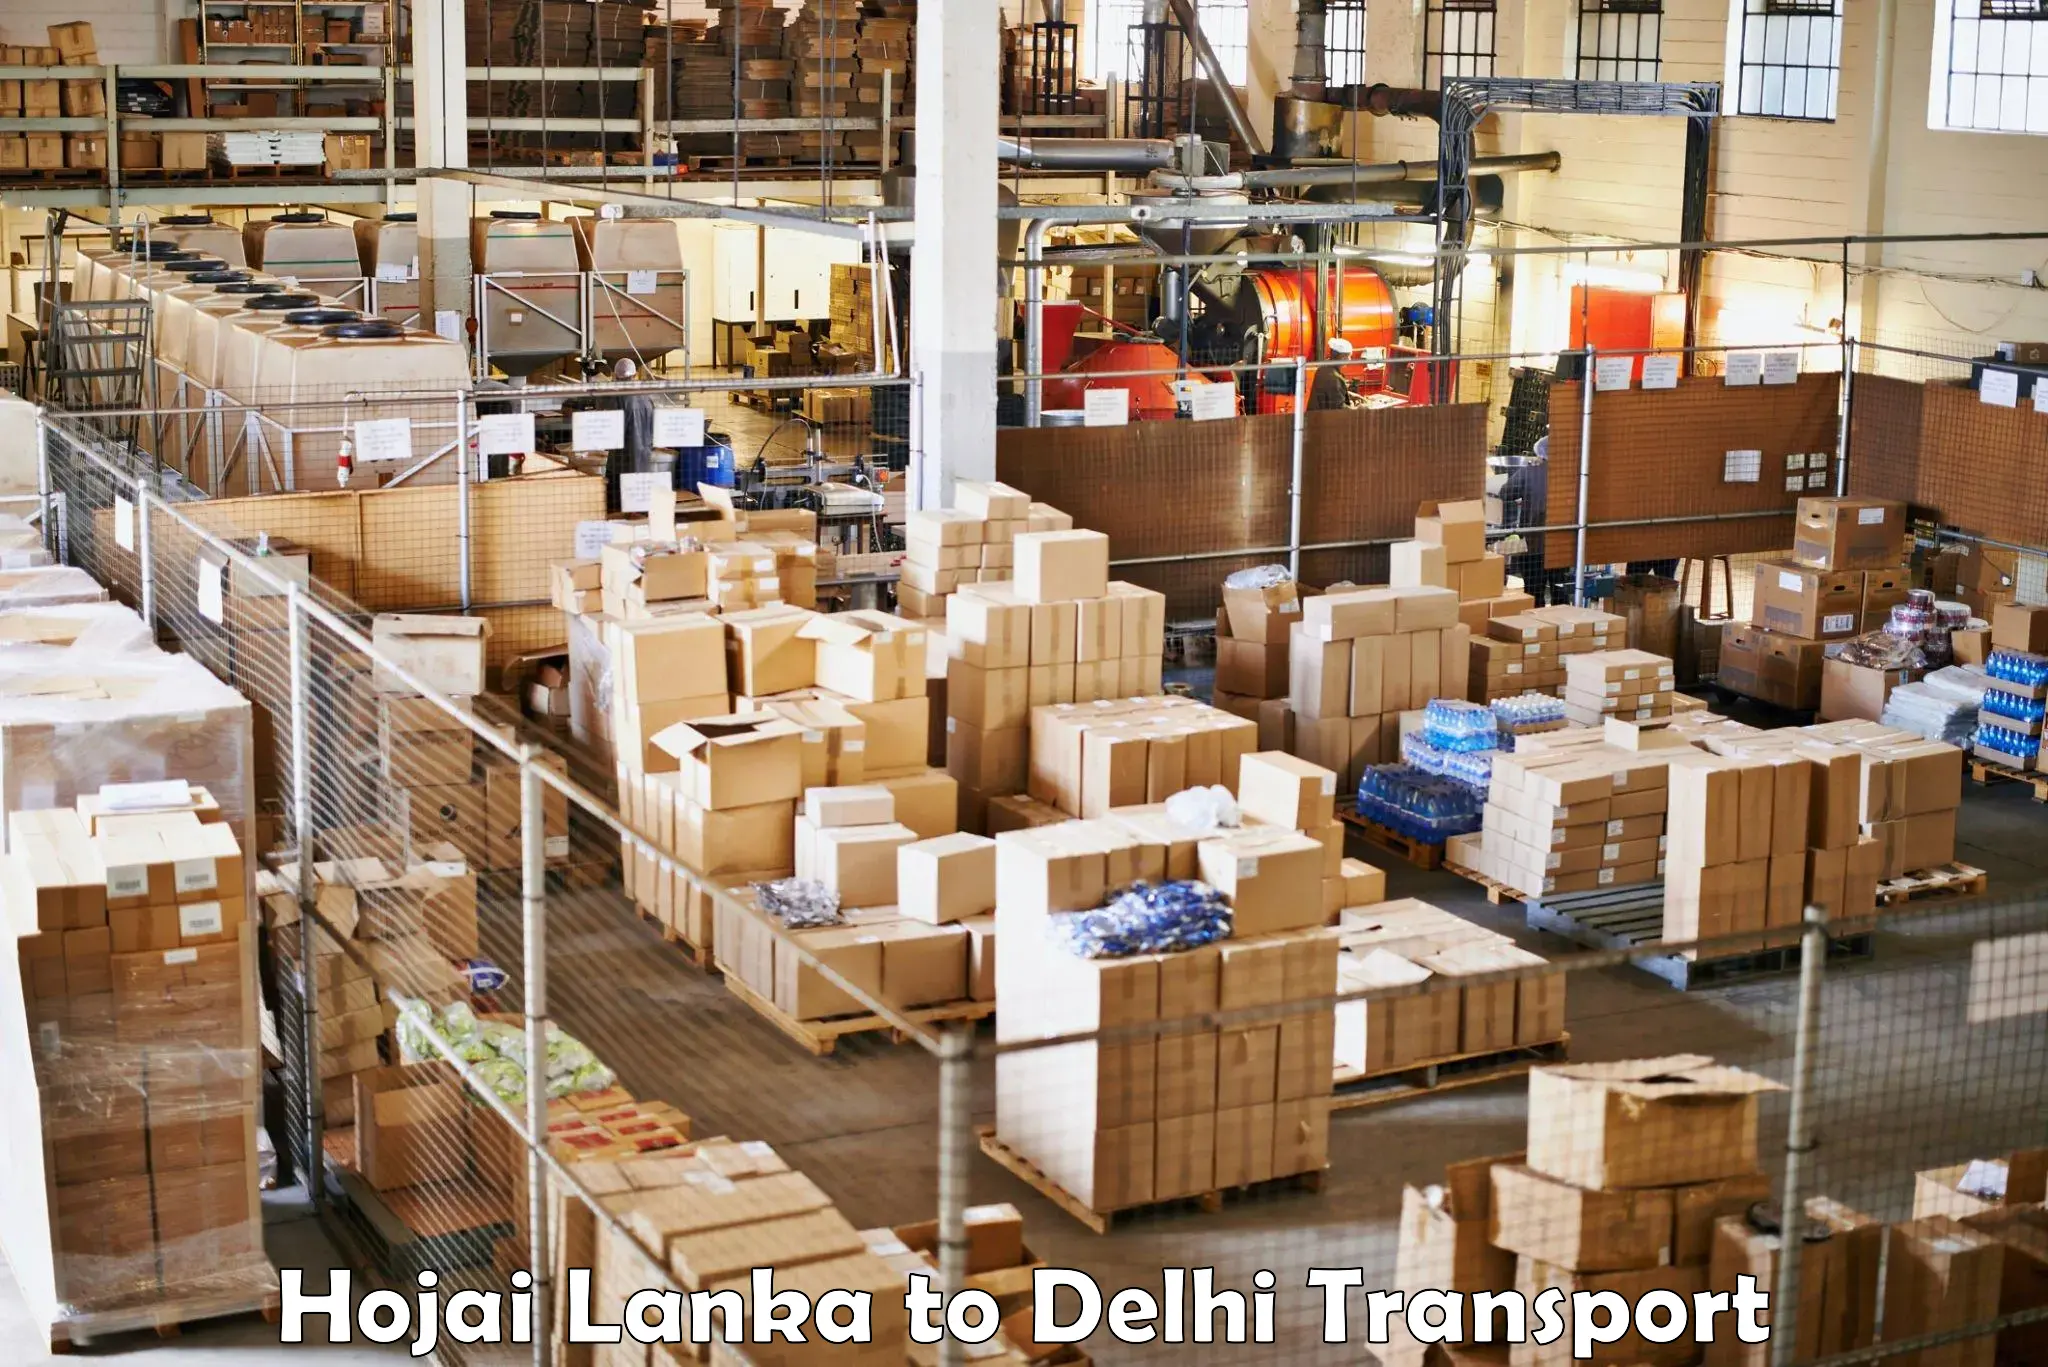 Pick up transport service Hojai Lanka to Delhi